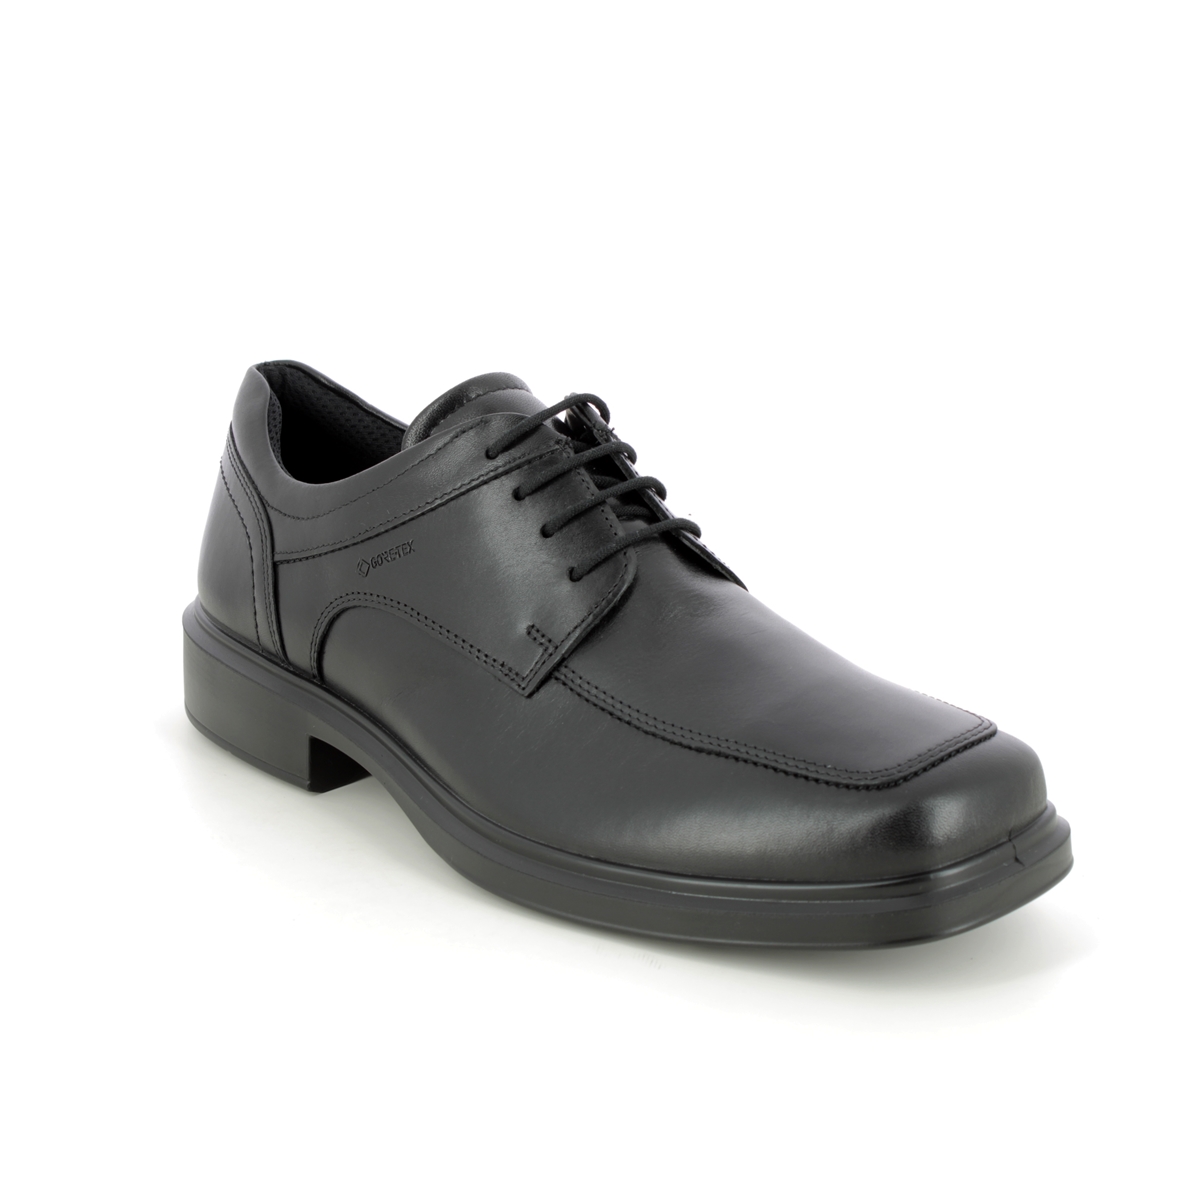 Ecco Helsinki 2 Gtx Black Leather Mens Formal Shoes 500204-01001 In Size 46 In Plain Black Leather